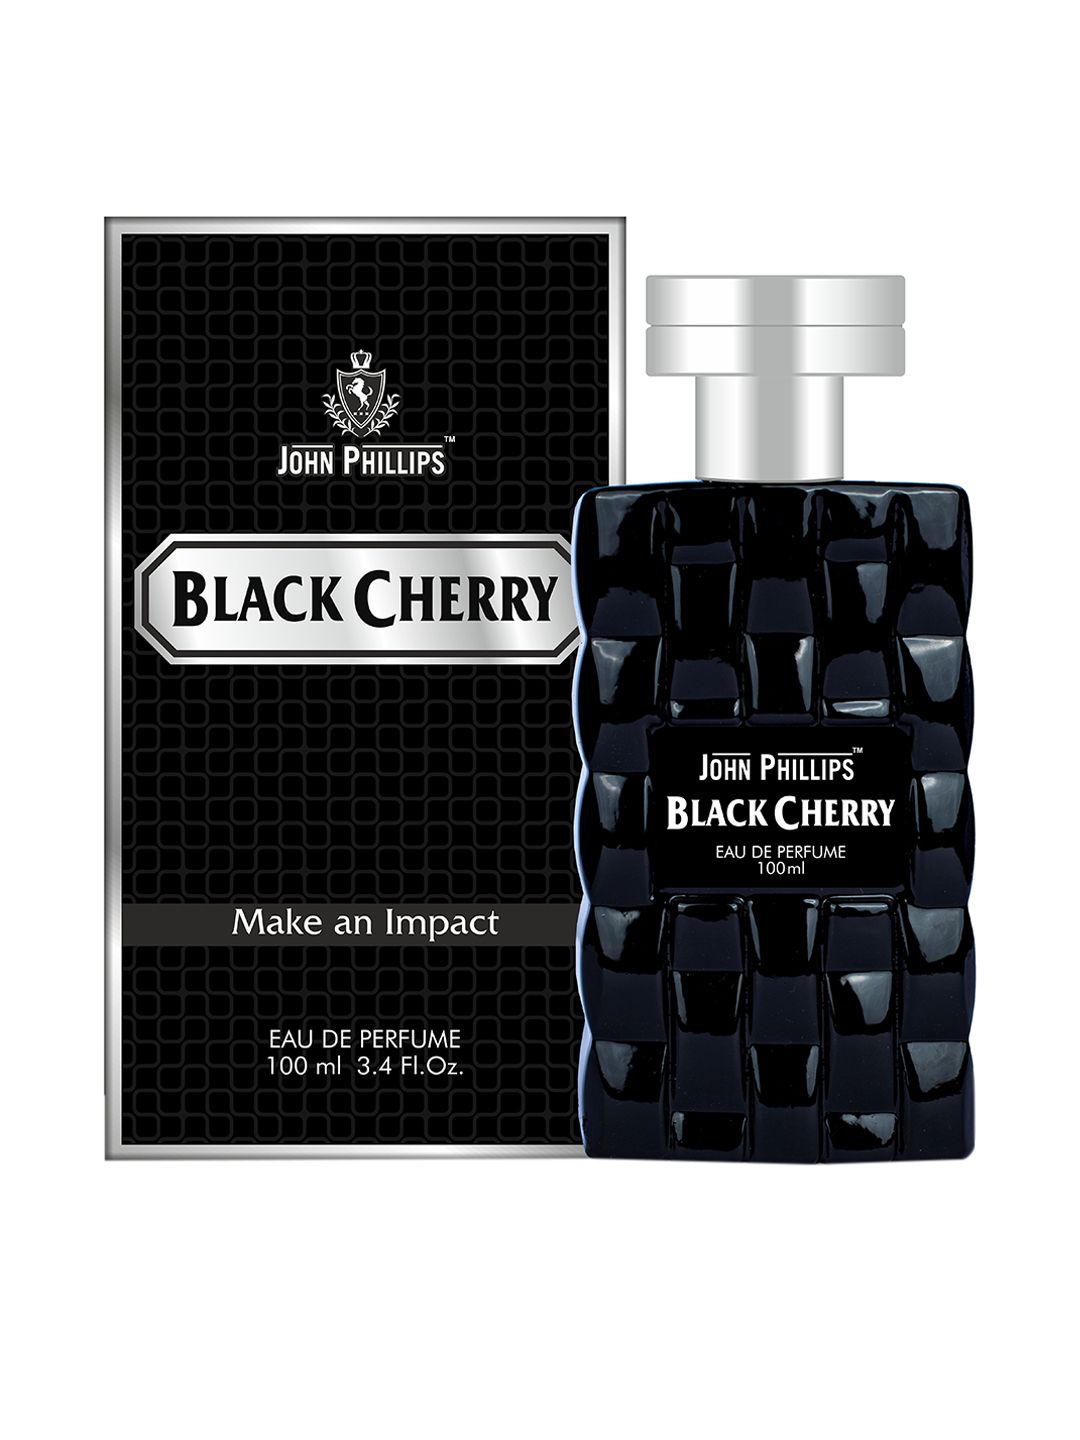 JOHN PHILLIPS Black Perfume and Body Mist Price in India